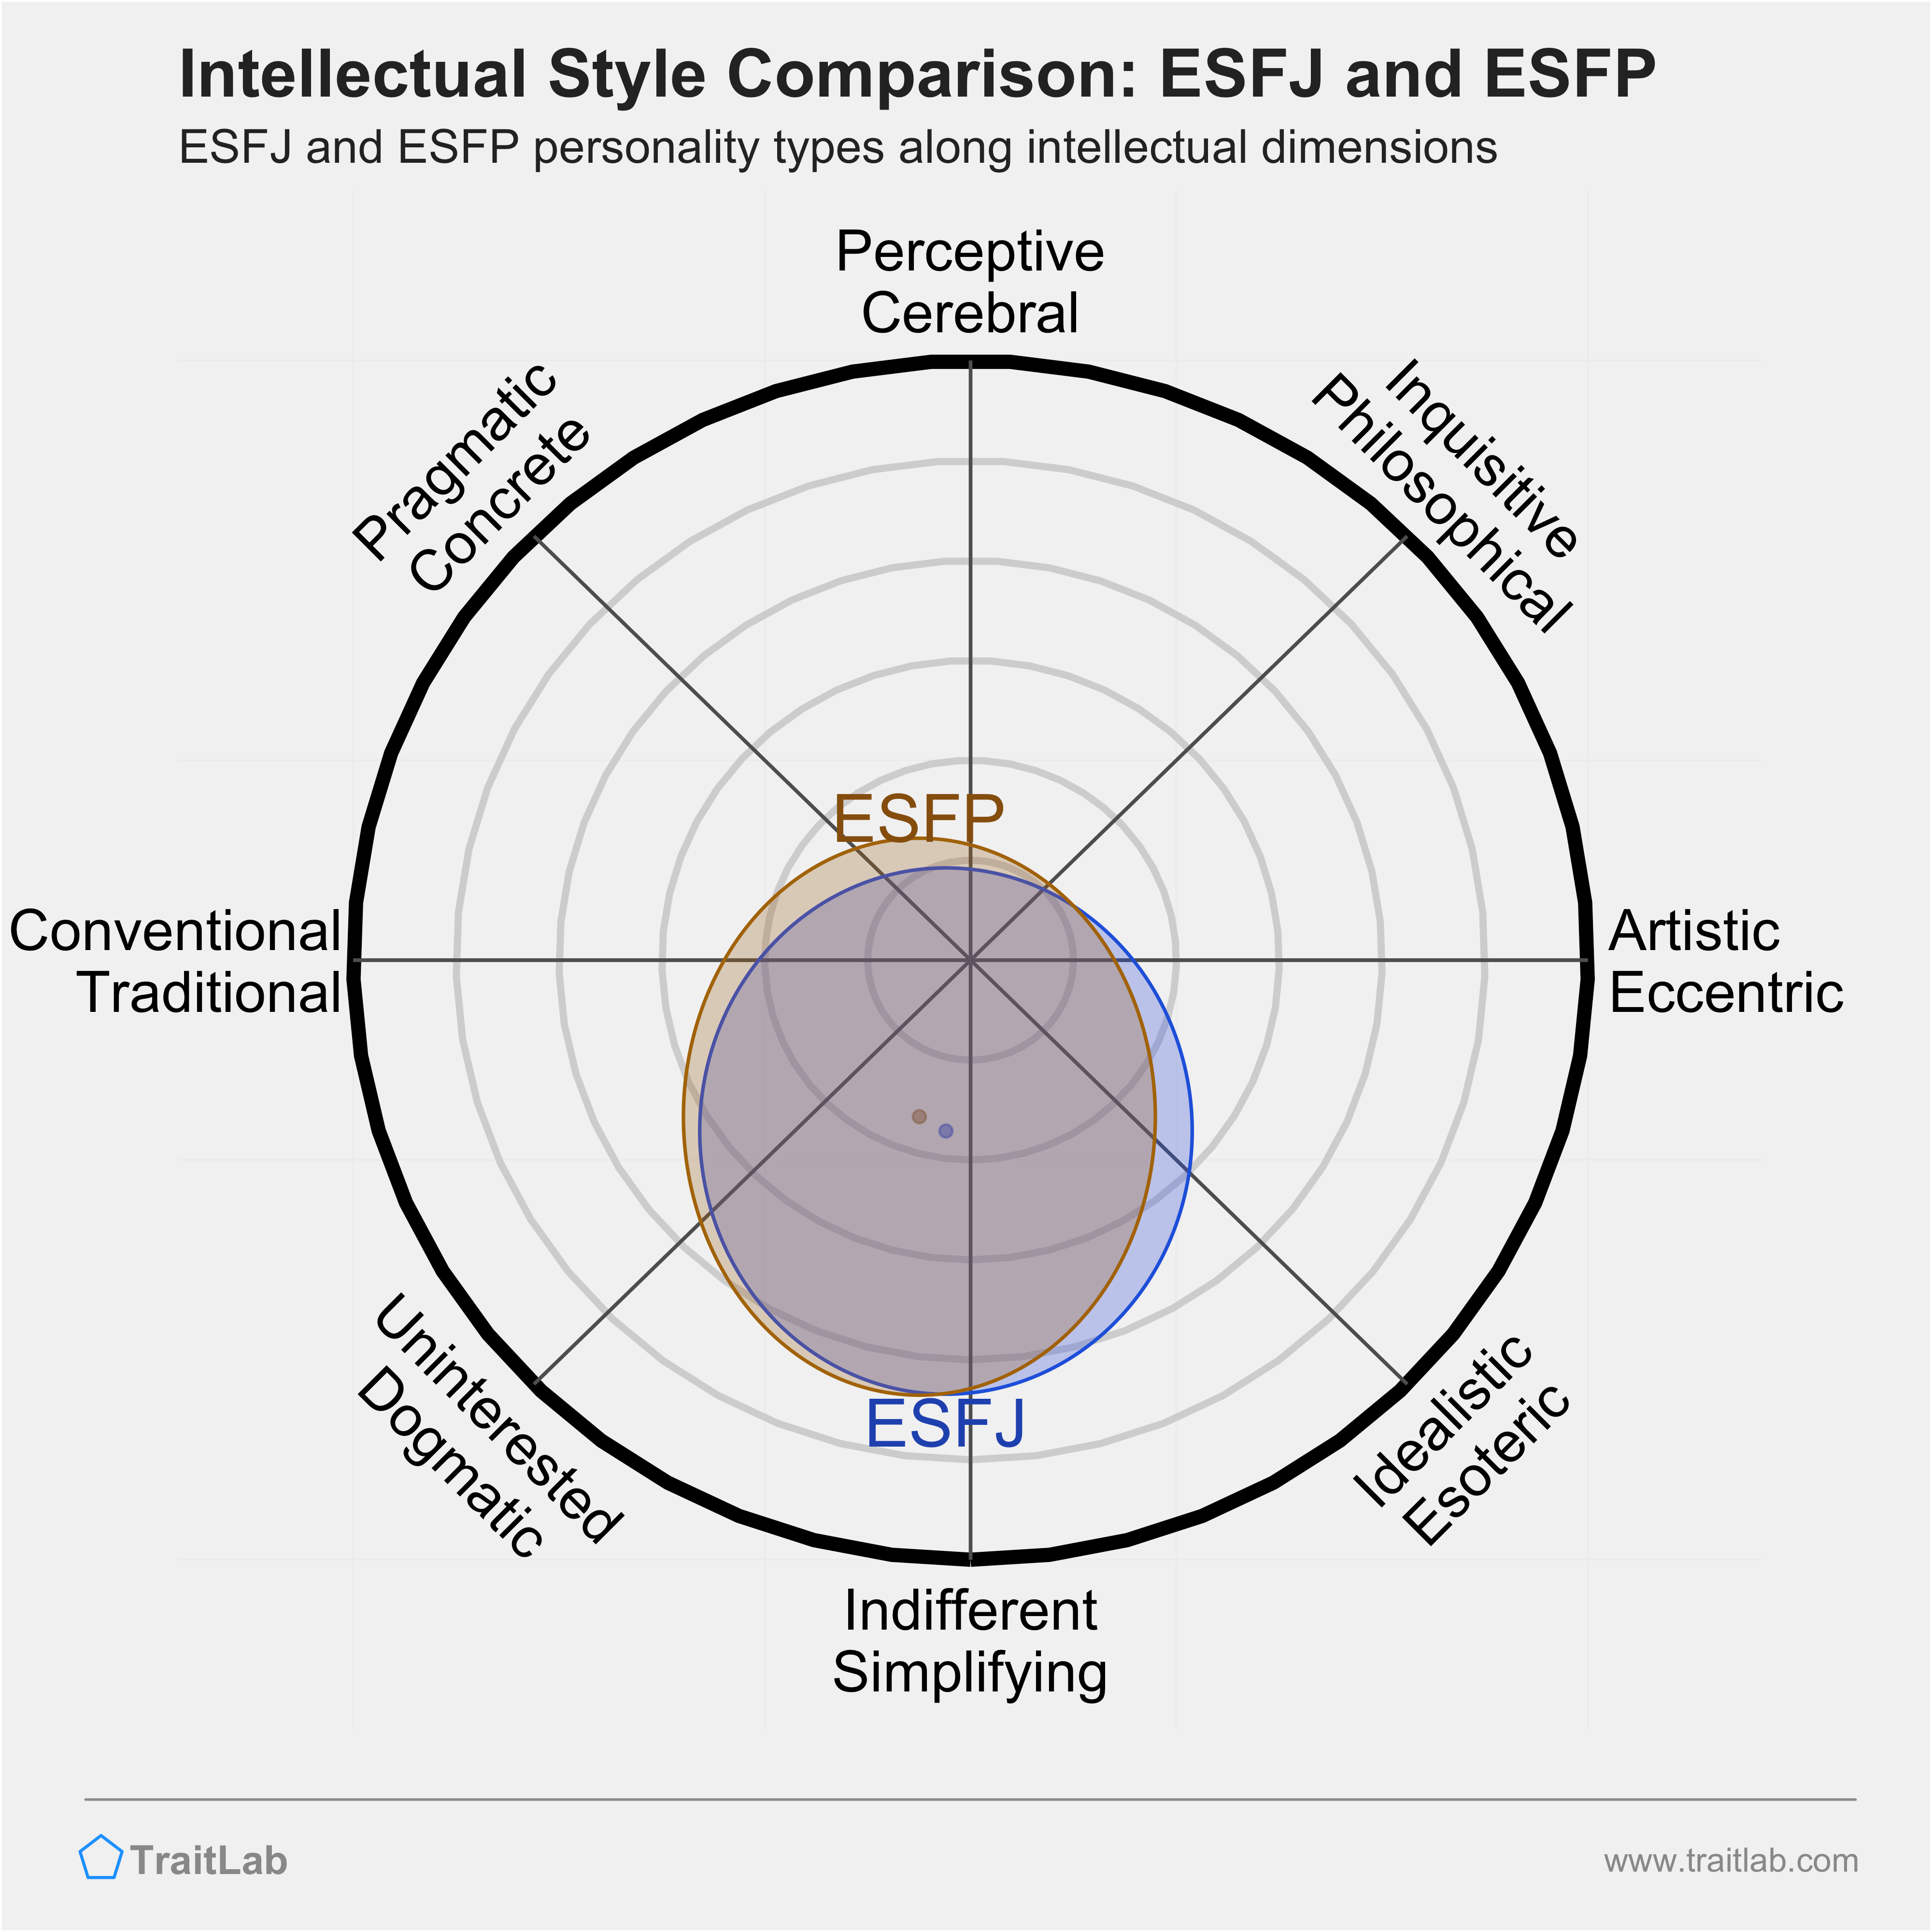 ESFJ and ESFP comparison across intellectual dimensions